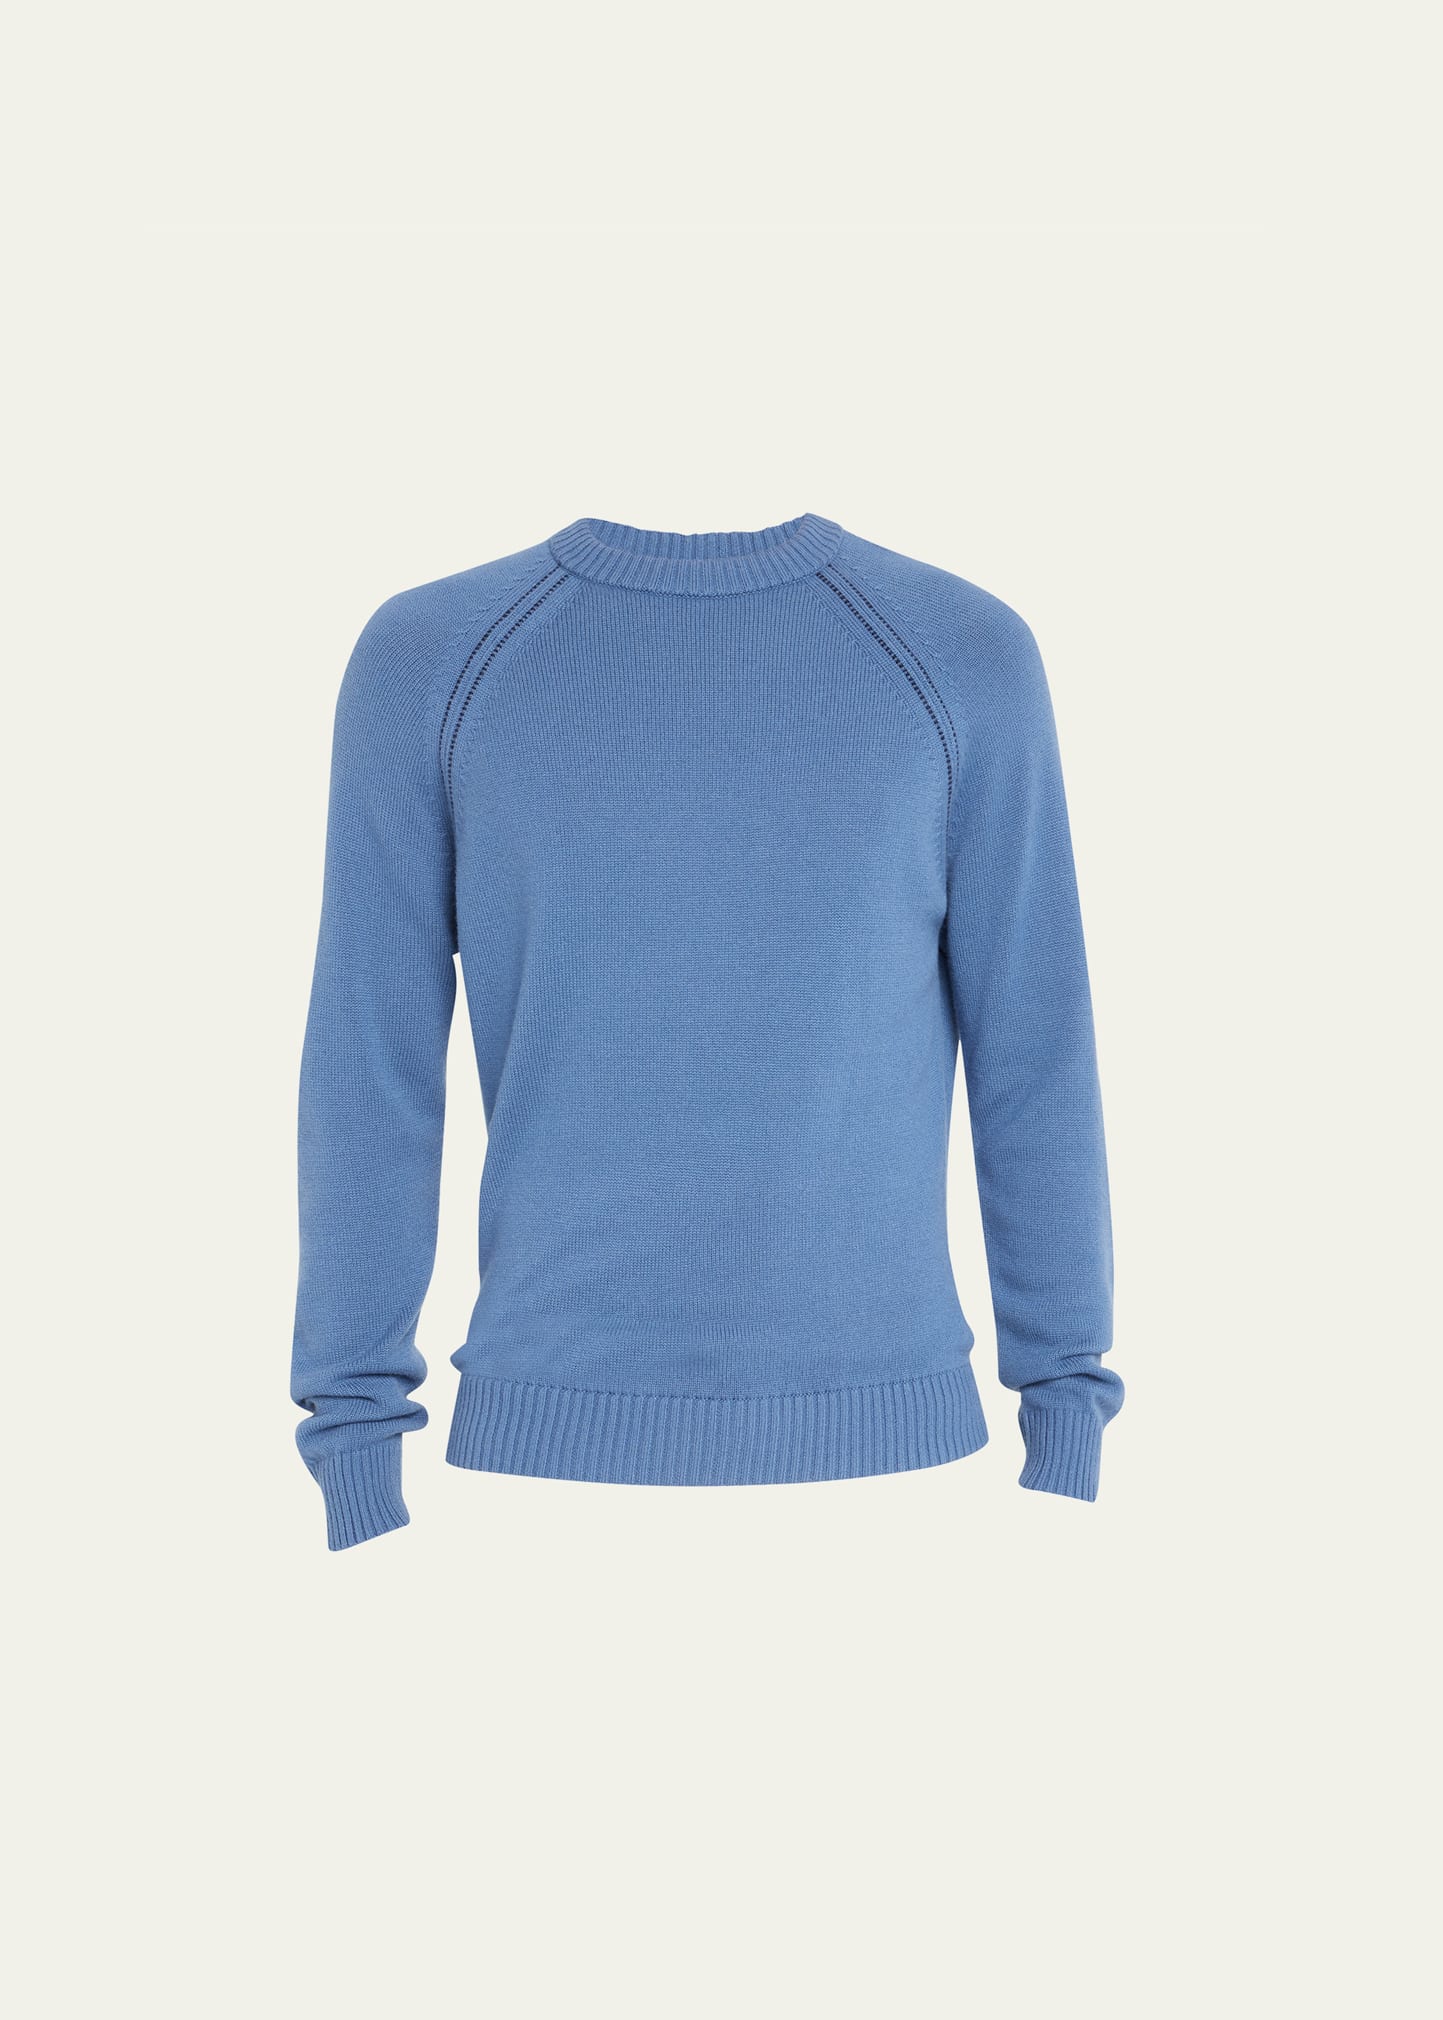 LORO PIANA Honeycomb-Knit Cashmere Sweater for Men